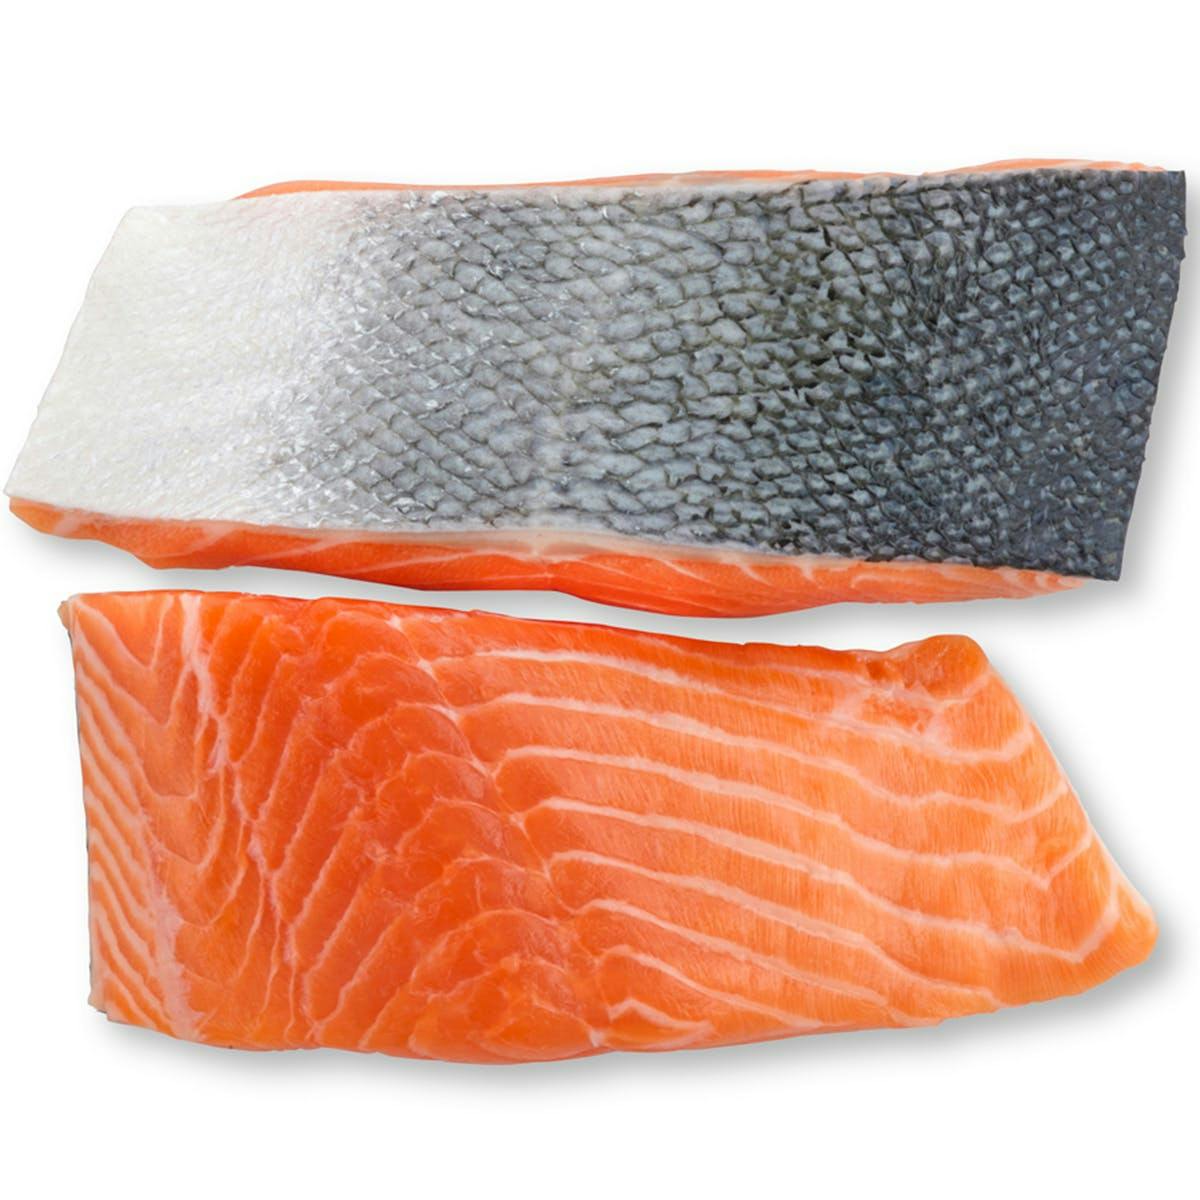 Prime Fresh Faroe Islands Salmon - 4 From Fulton Fish Market